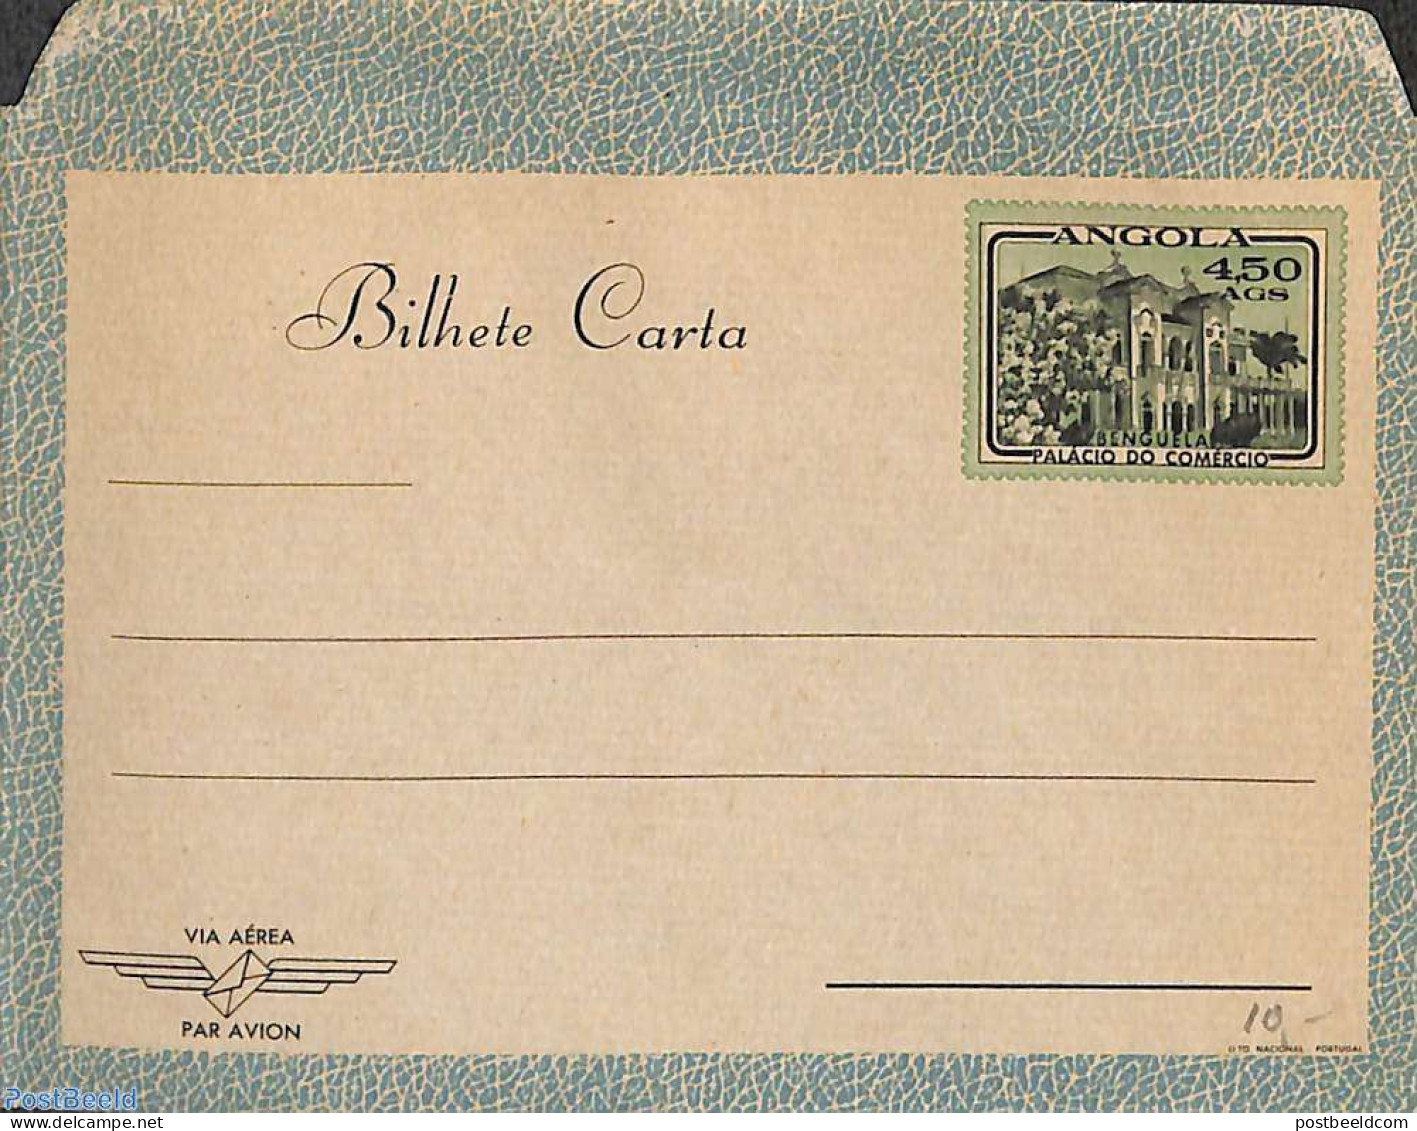 Angola 1950 Aerogramme 4.50, Grey Paper, Blue Border, Unused Postal Stationary - Angola